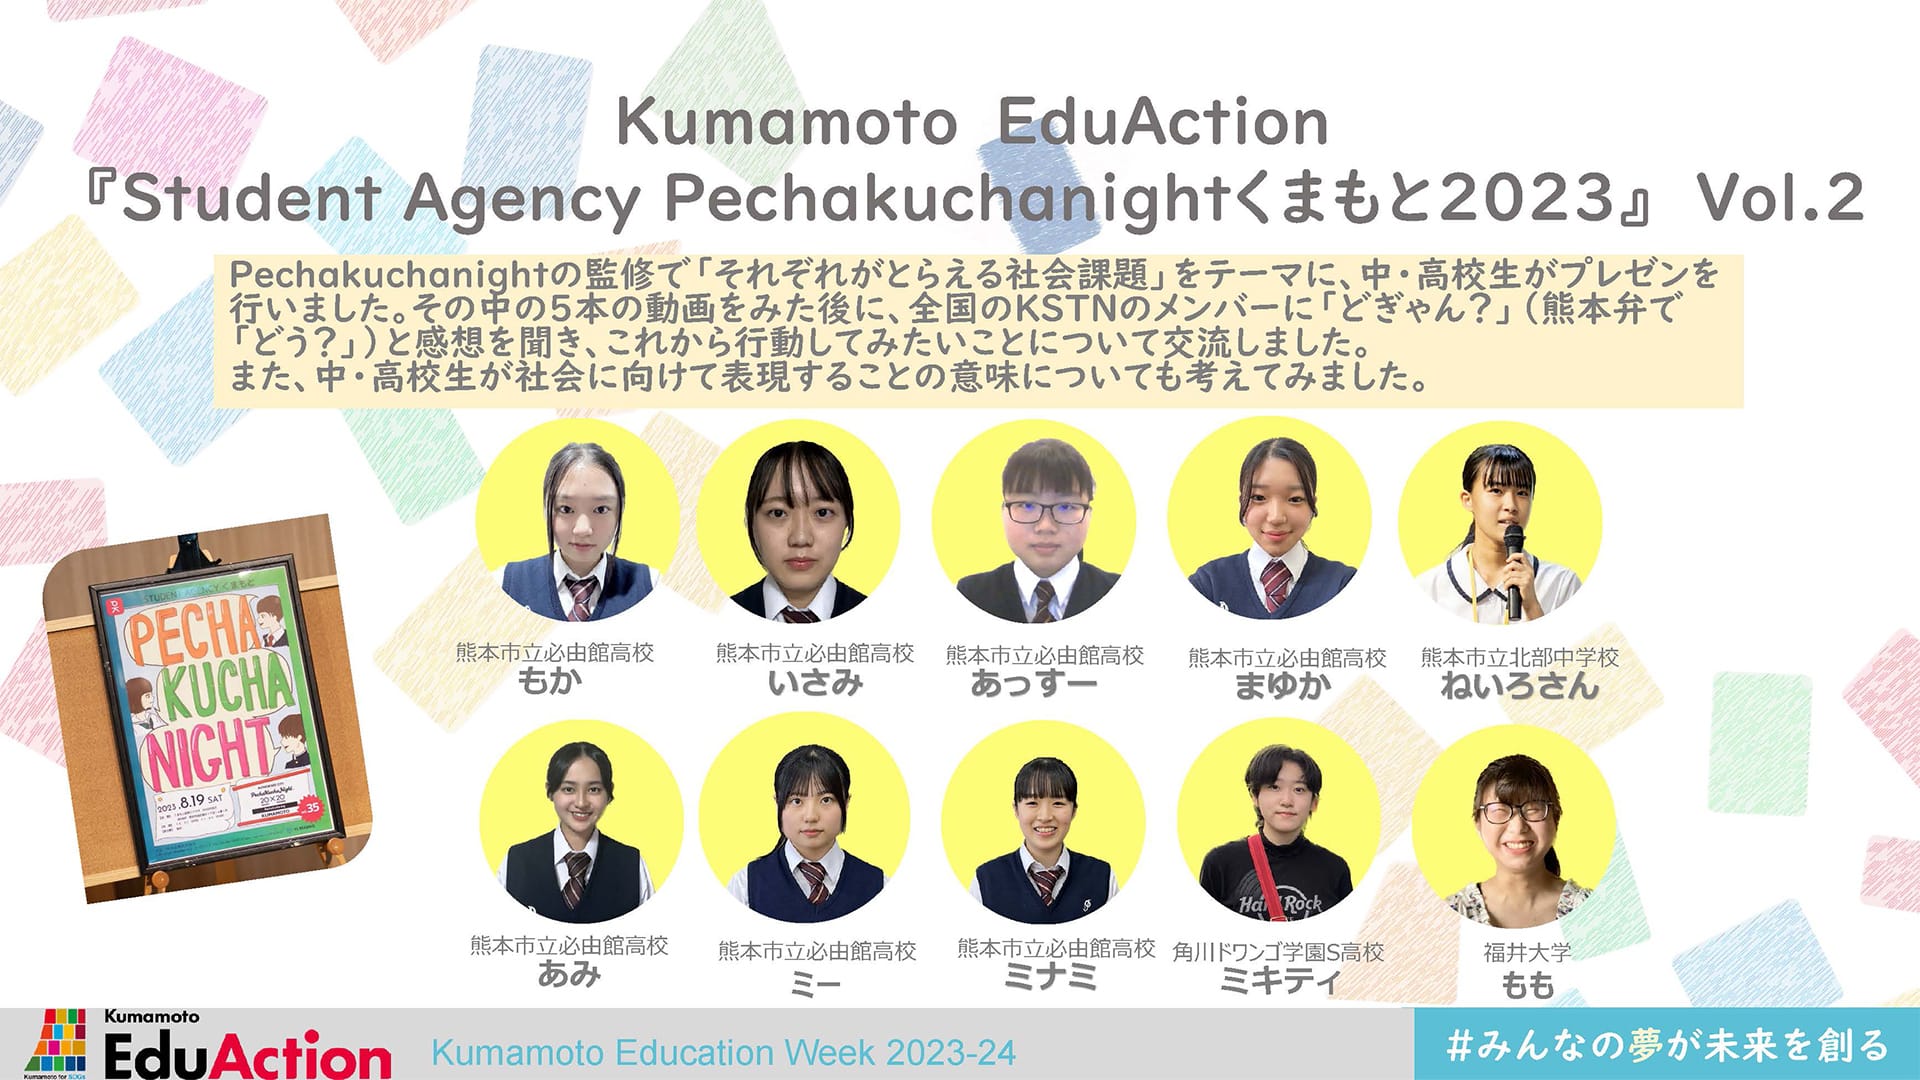 Kumamoto EduAction『Student Agency   Pechakuchanightくまもと2023』Vol.2